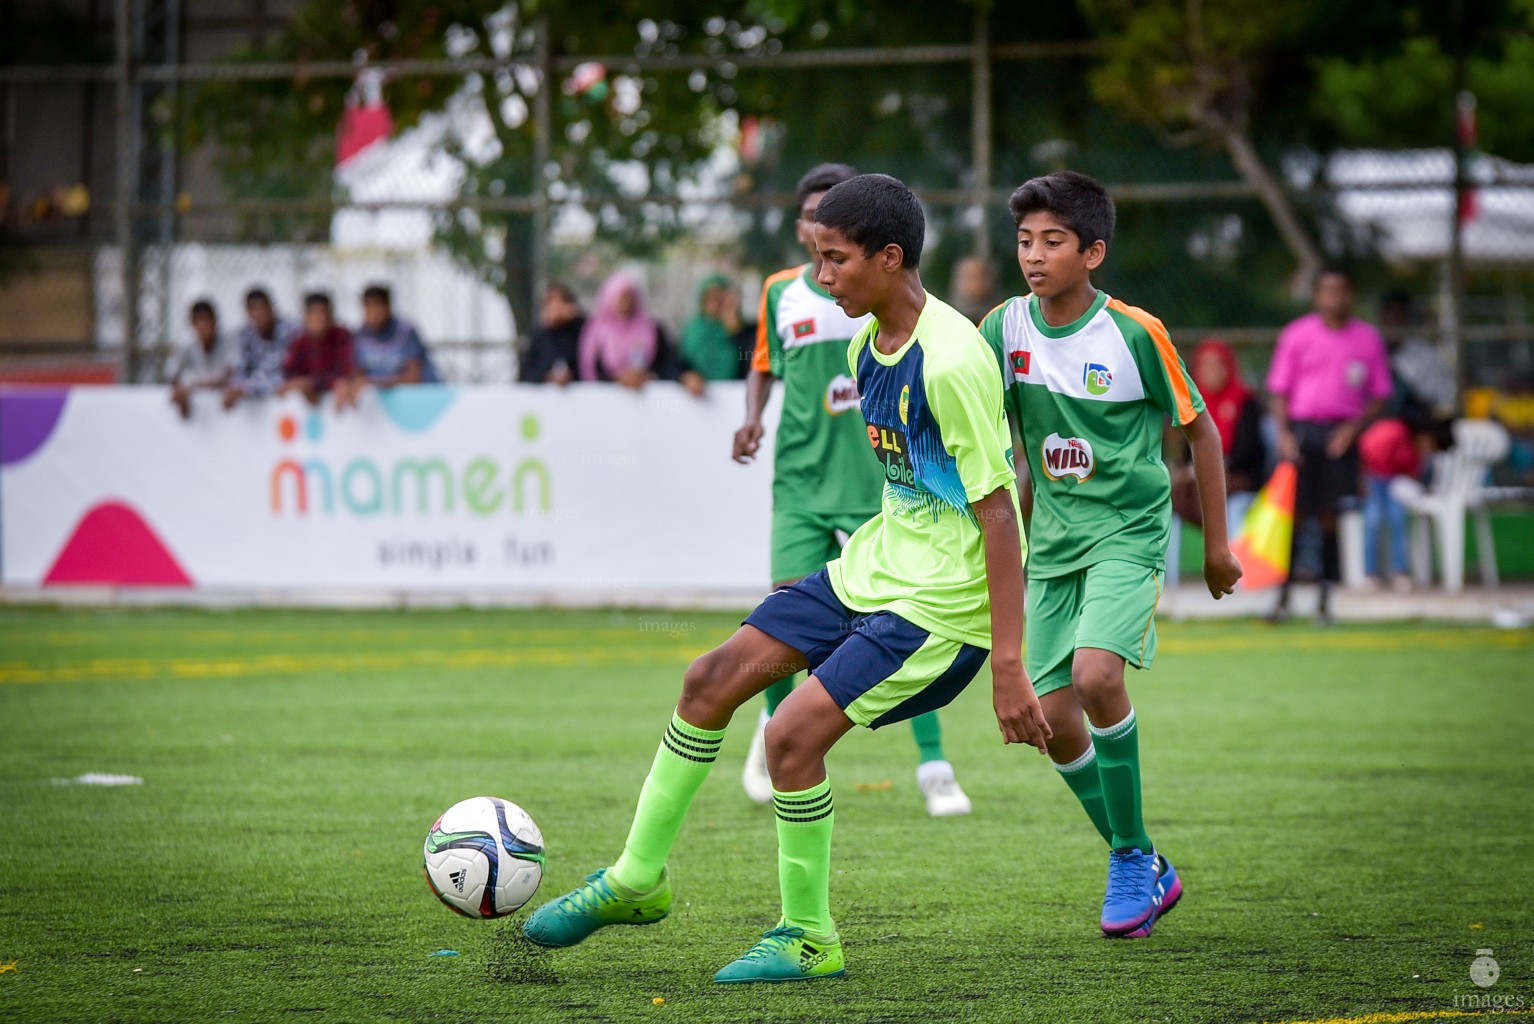 Dhiraagu U-13 Youth League 2018 (HSS vs Maziya)